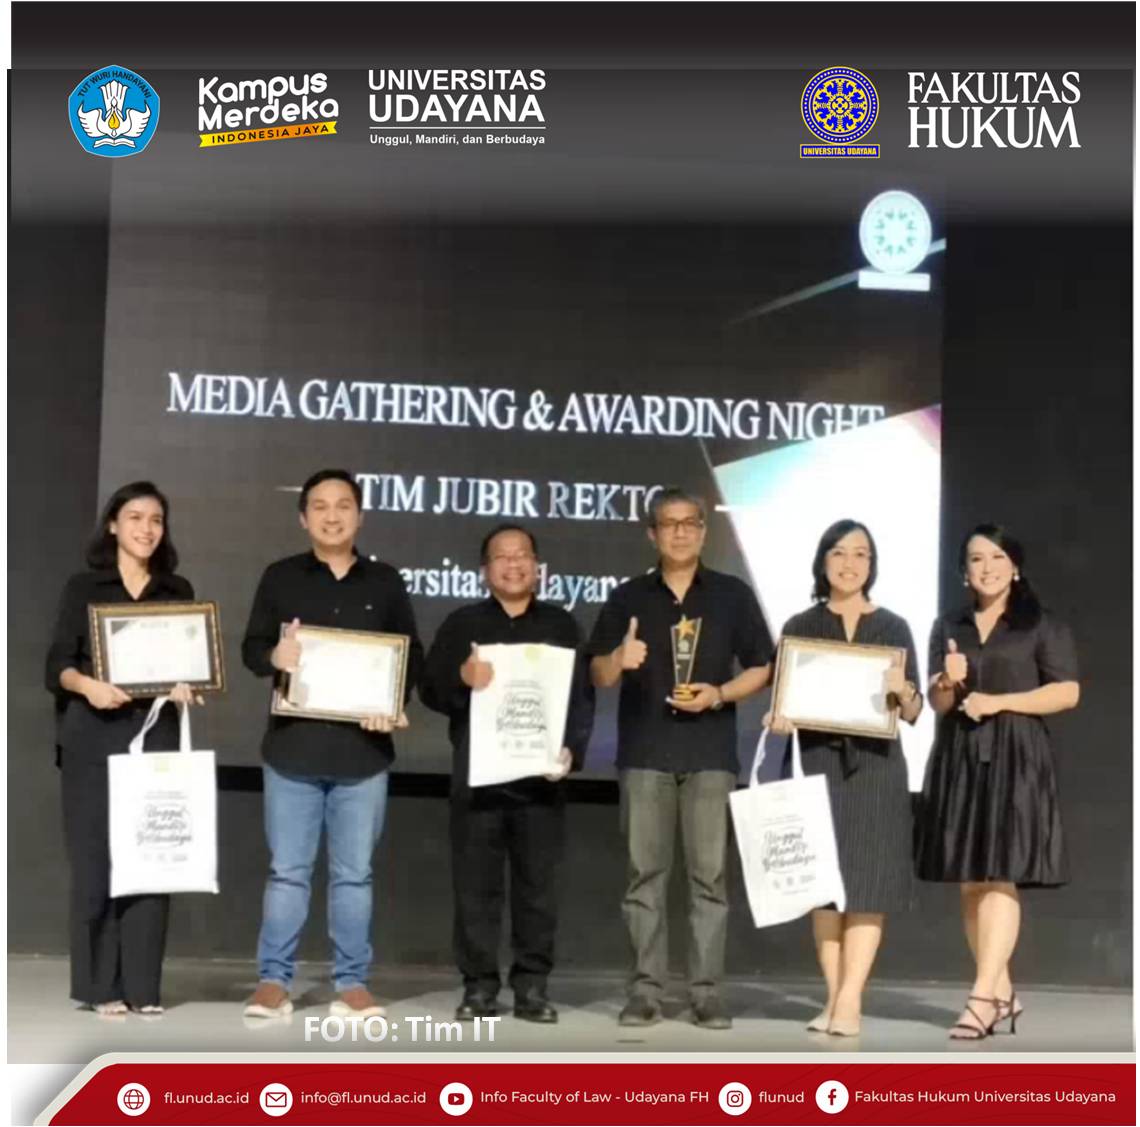 UPIKS FH UNUD Team won 3 Awards at Media Gathering and Awarding Night